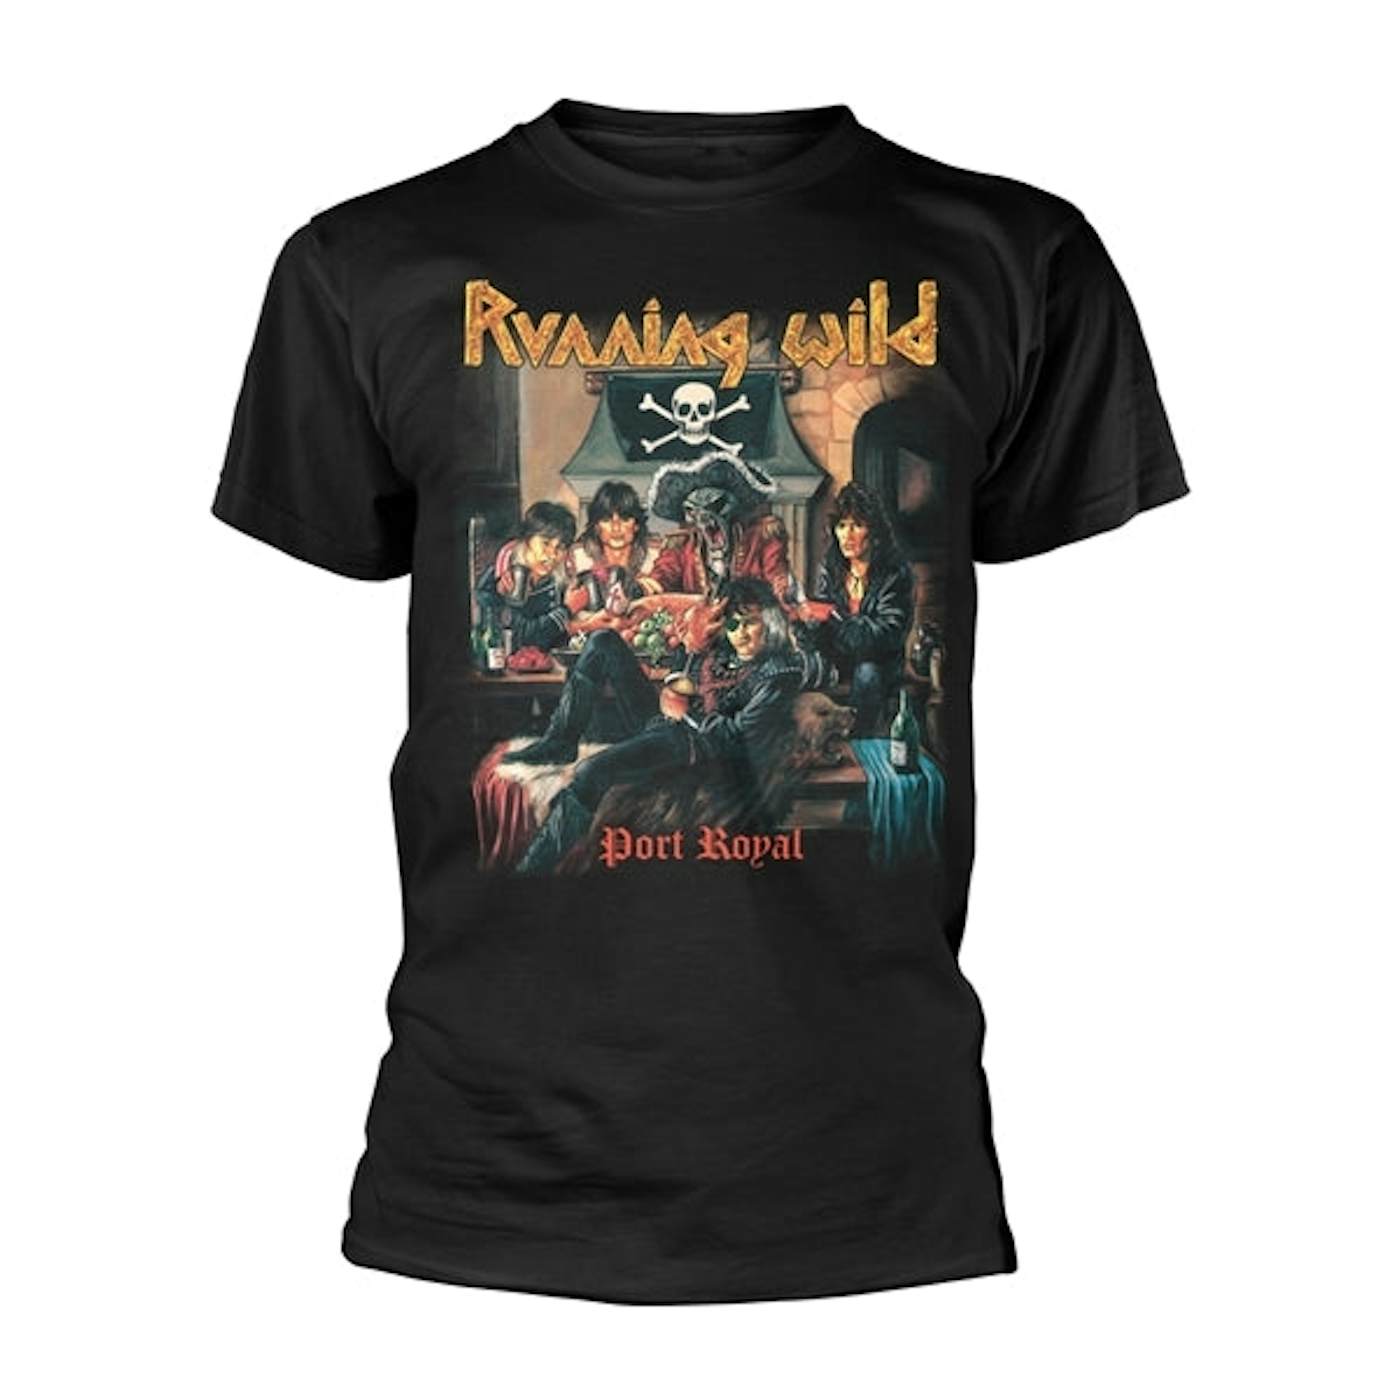 Running Wild T Shirt - Port Royal